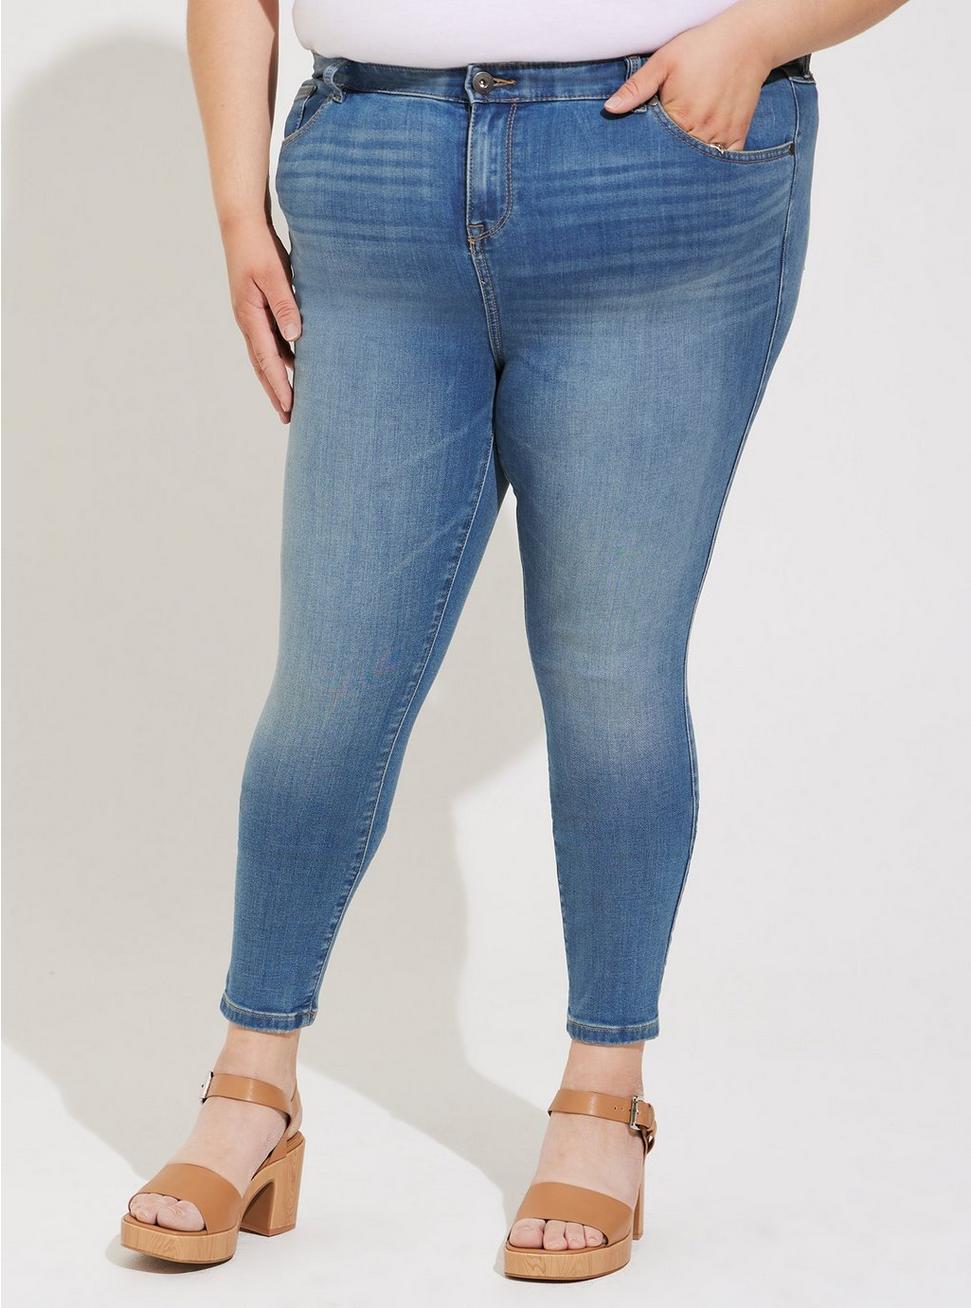 MidFit Skinny Super Soft Mid-Rise Jean, SEAFLOOR, hi-res